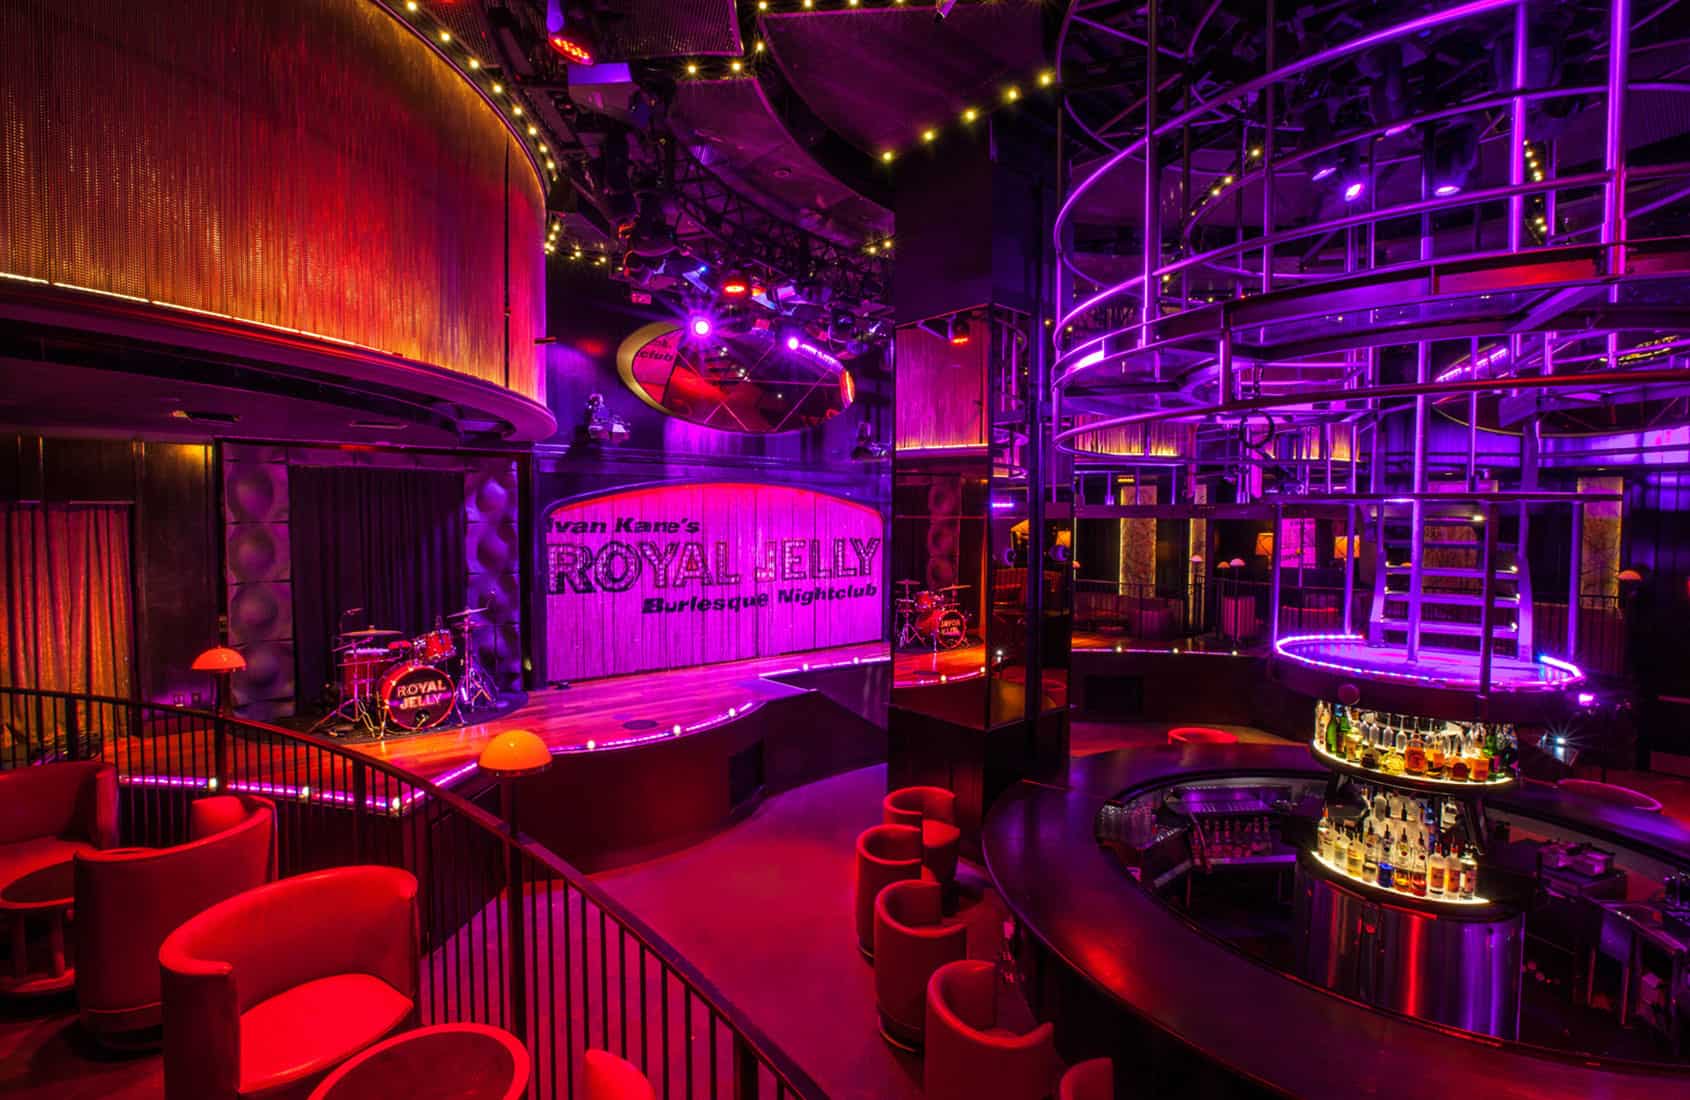 Ivan Kane's Royal Jelly Burlesque Nightclub